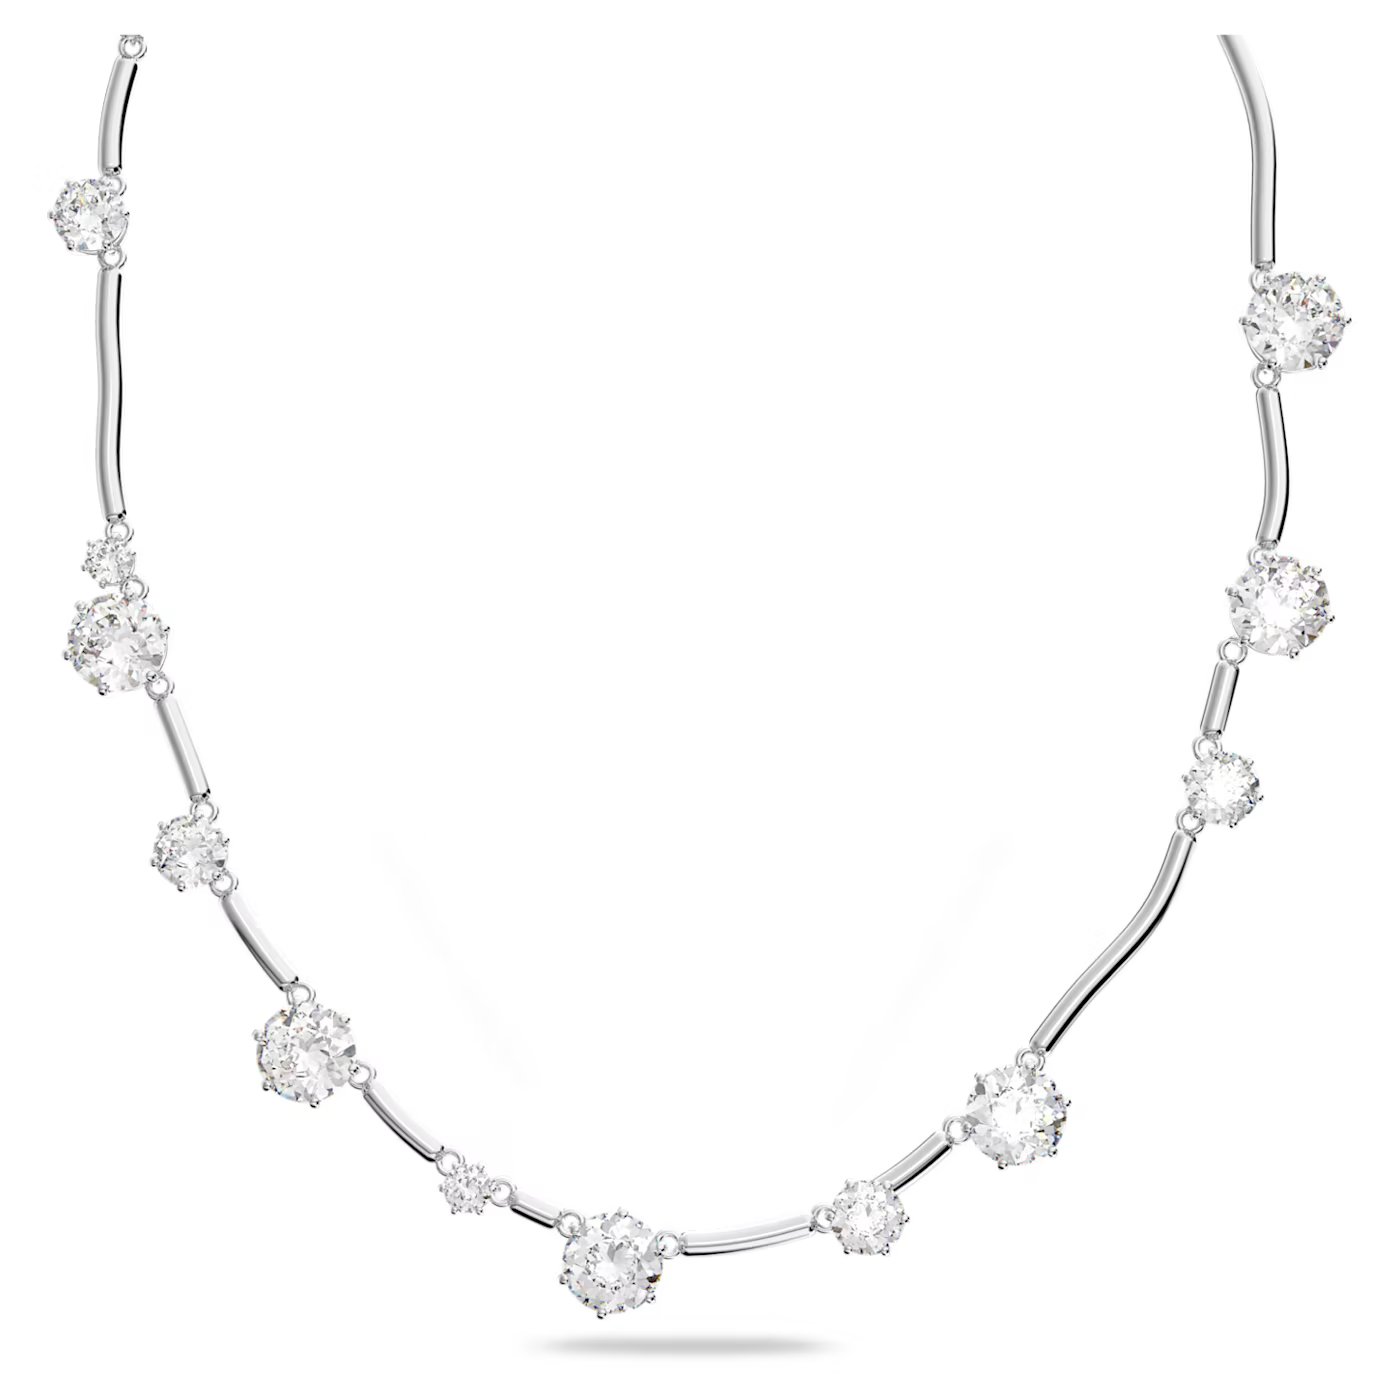 62c7f3e581ff2_px-constella-necklace--mixed-round-cuts--white--rhodium-plated-swarovski-5638696 (1) (1).jpg